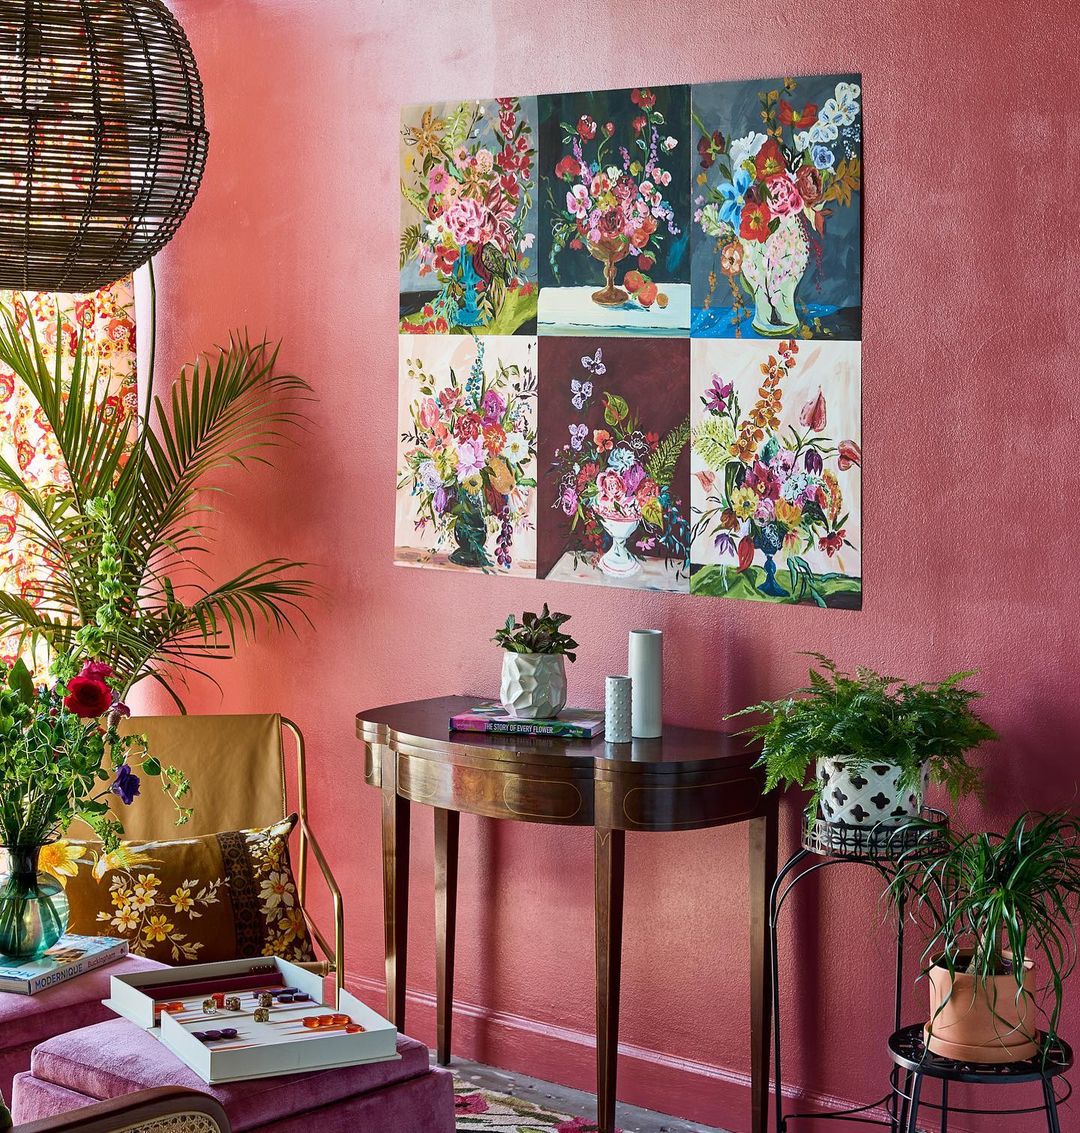 Make All Of Your Colorful Maximalist Furniture Dreams Come True